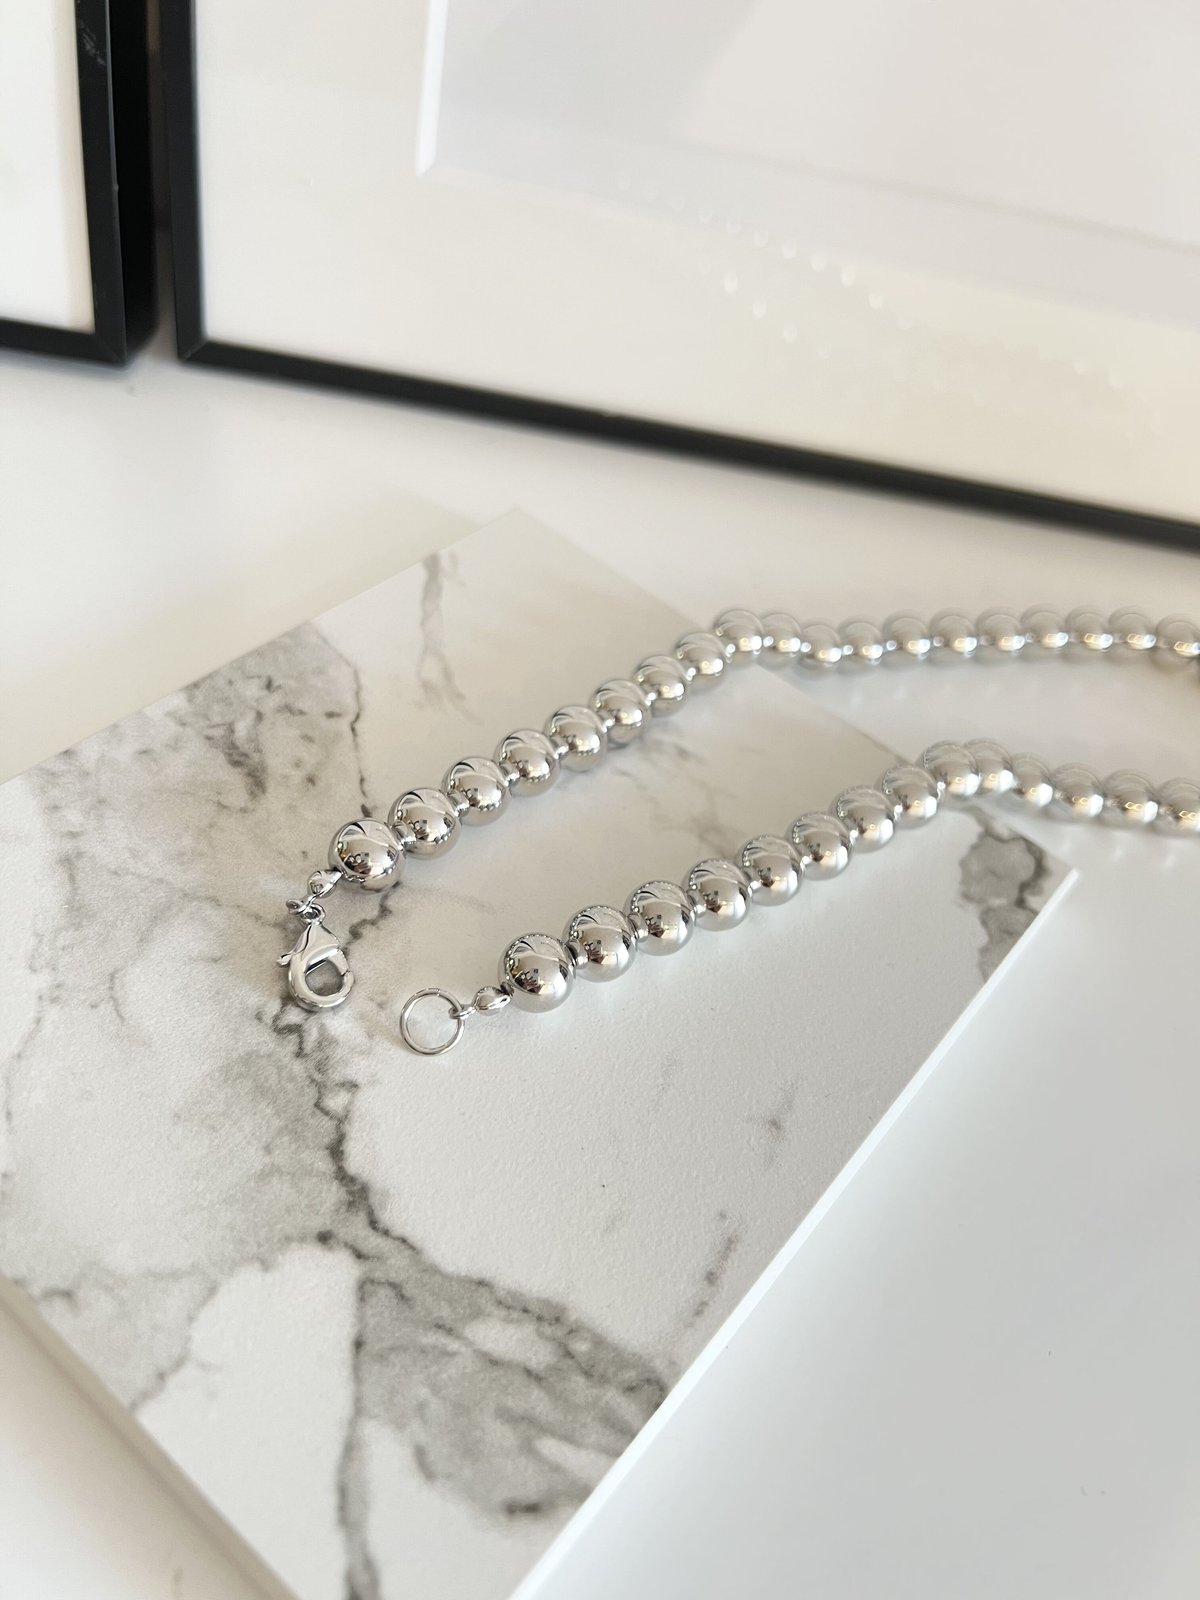 shellstar silverball beads necklace